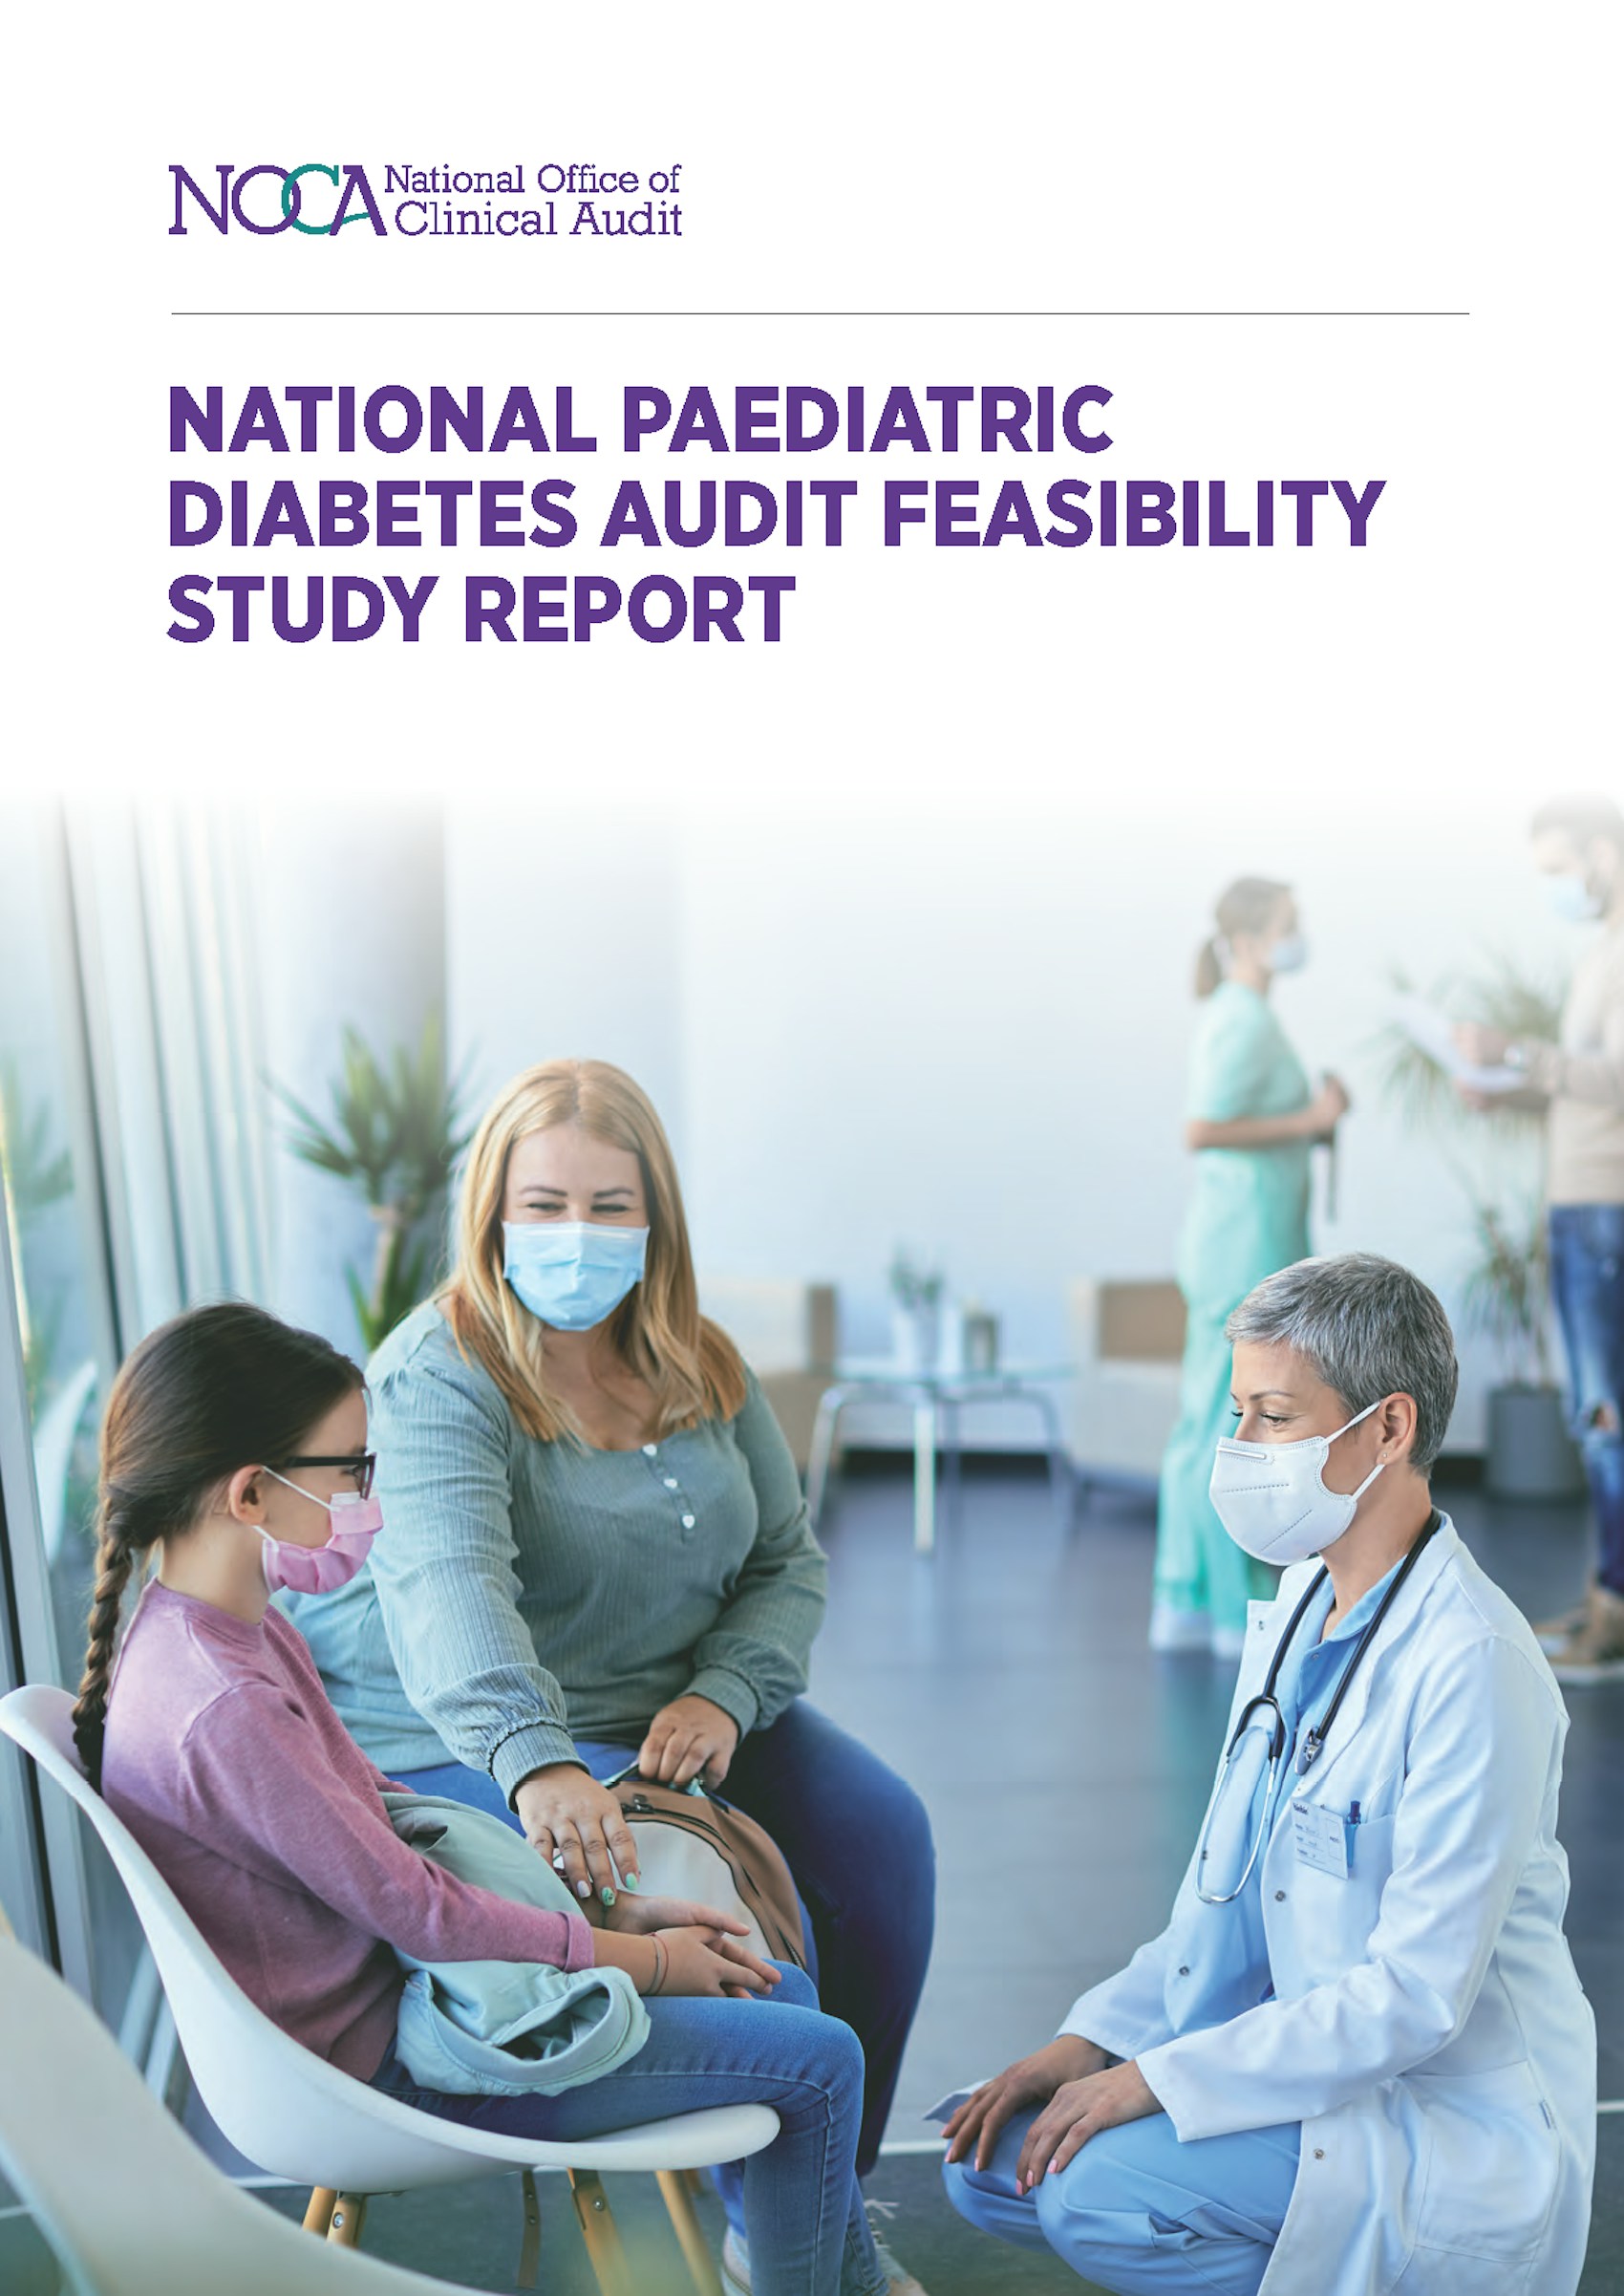 NOCA report recommends establishment of a National Paediatric Diabetes Audit